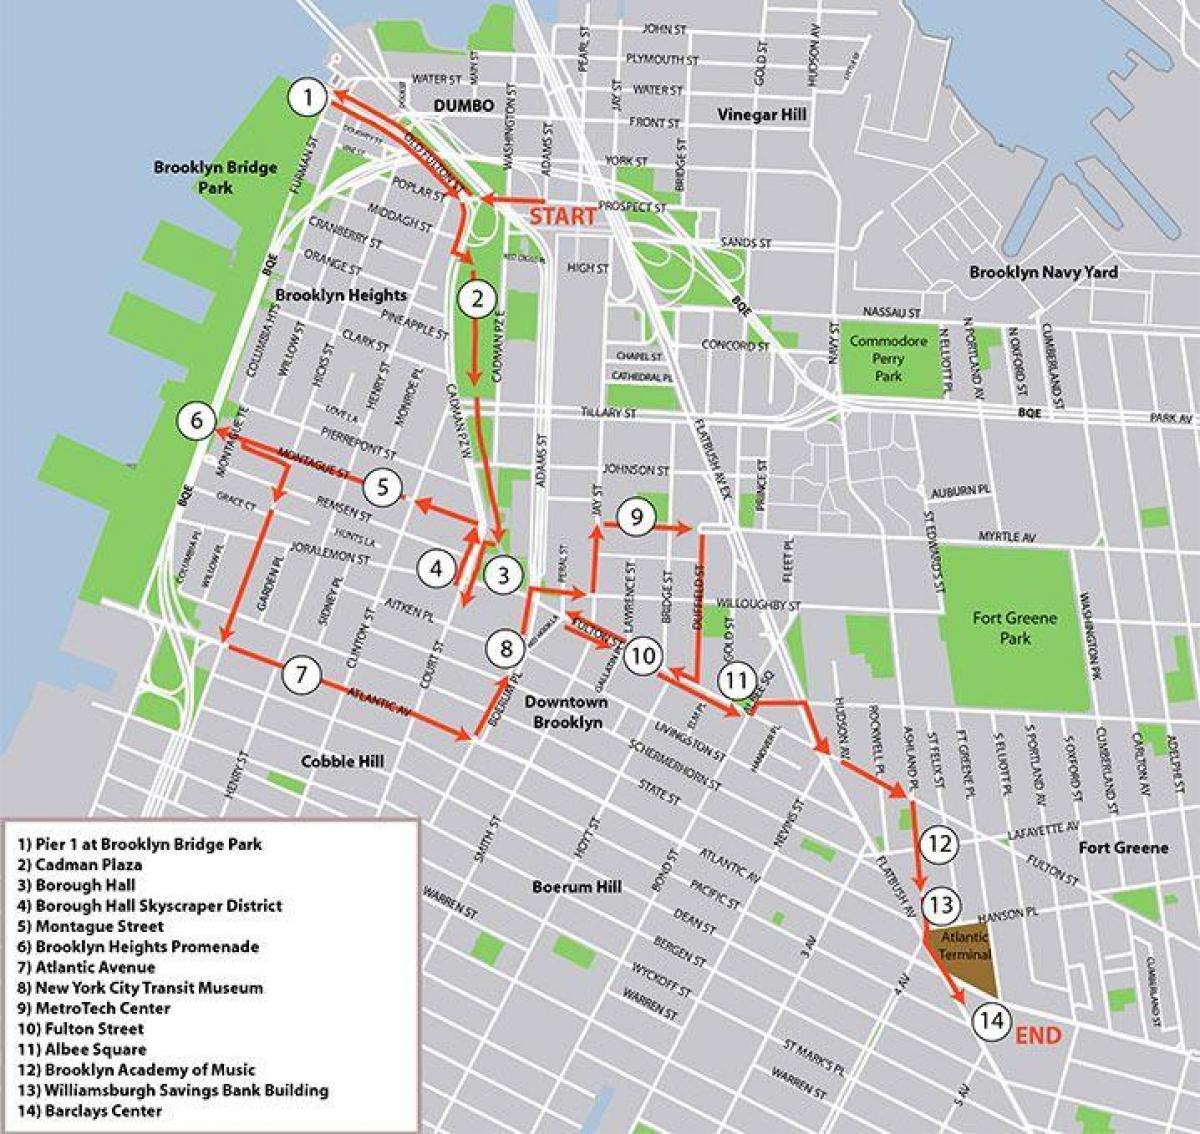 Mappa dei tour a piedi di Brooklyn